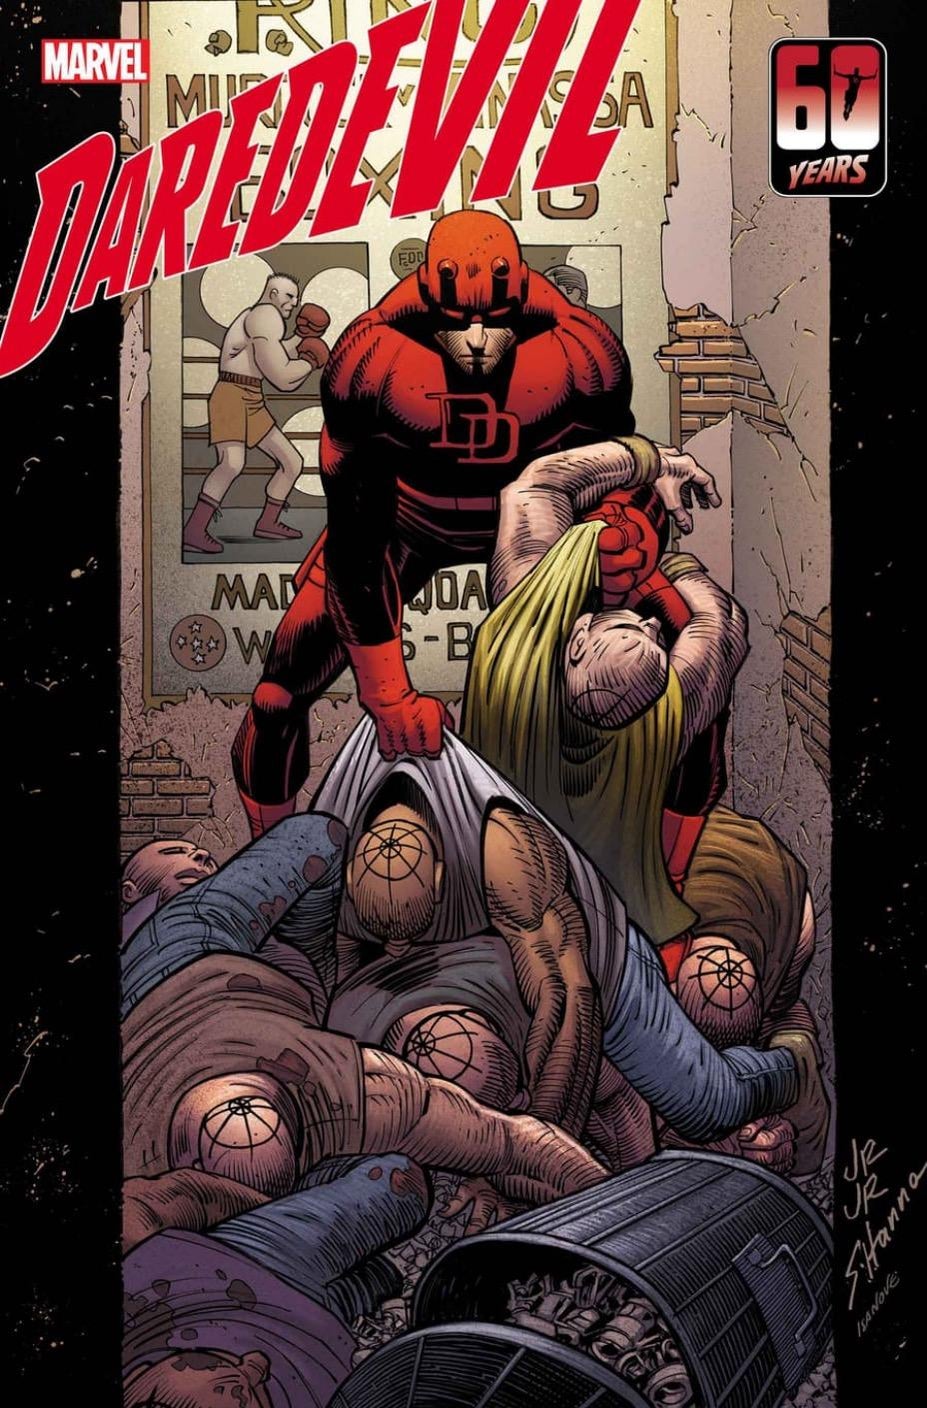 Marvel Announces Daredevil 60th Anniversary Issue